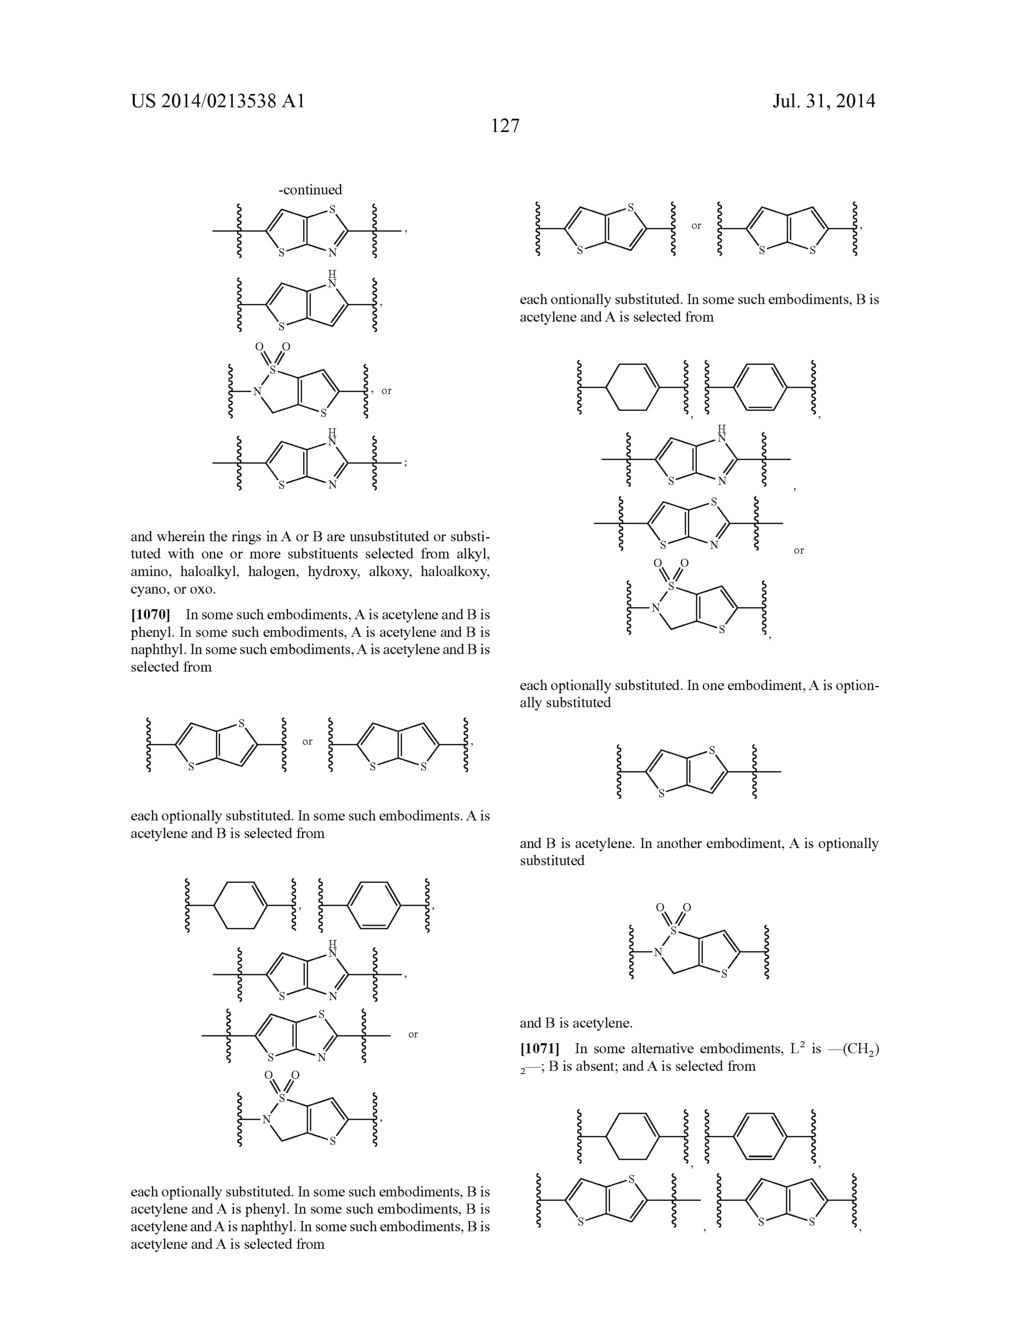 LYSOPHOSPHATIDIC ACID RECEPTOR ANTAGONISTS - diagram, schematic, and image 128